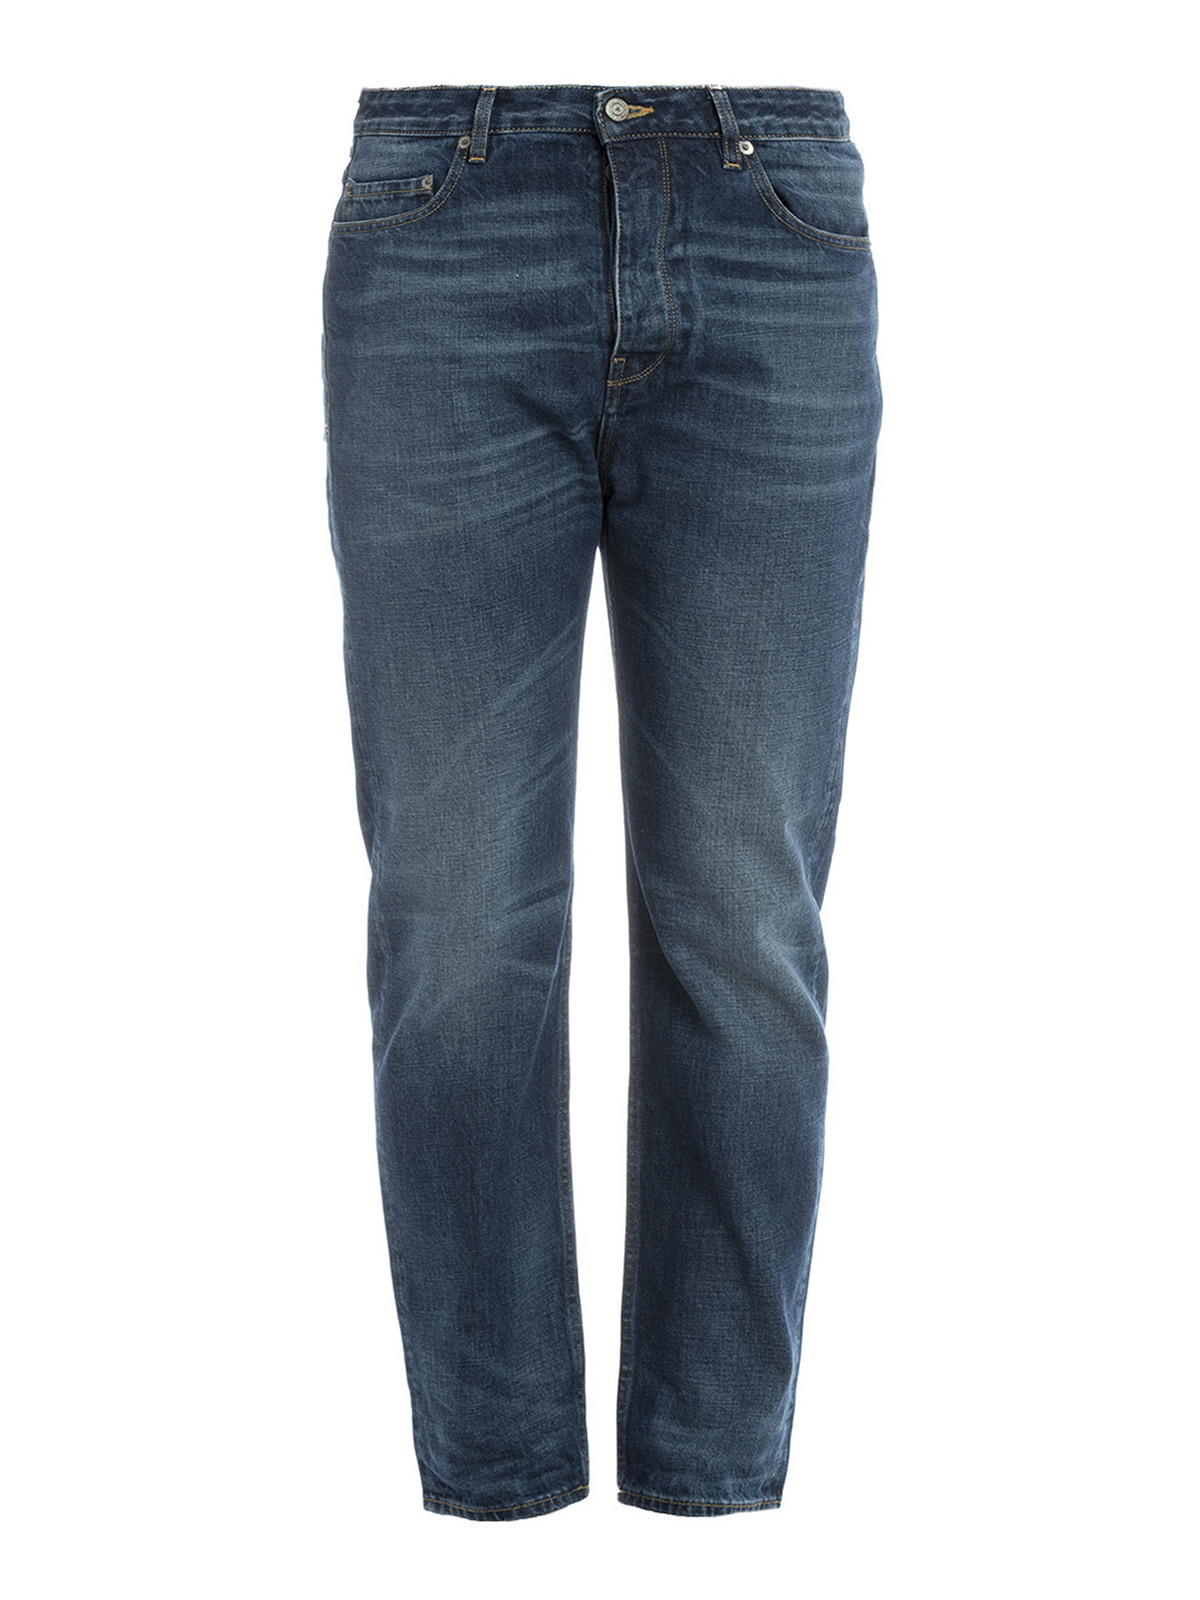 Straight leg jeans Golden Goose - Stone washed cotton denim jeans ...